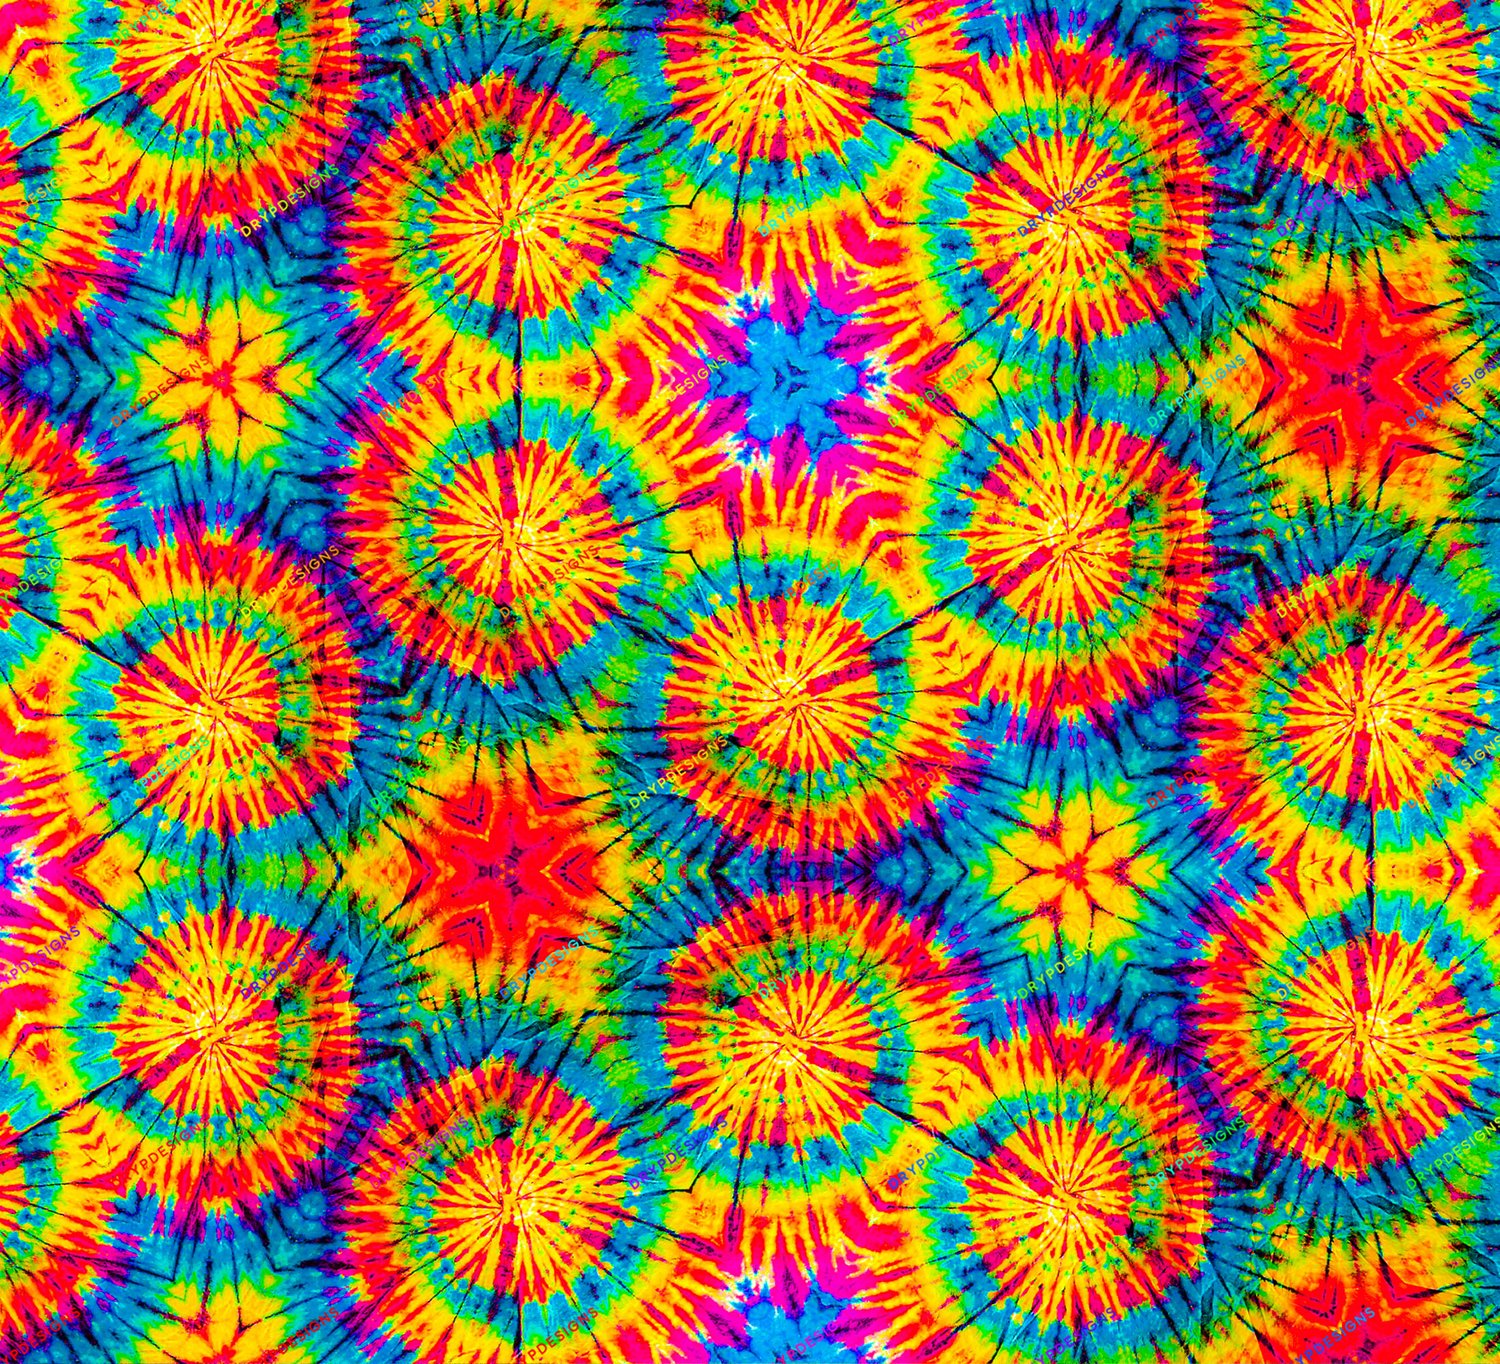 rainbow tie dye patterns